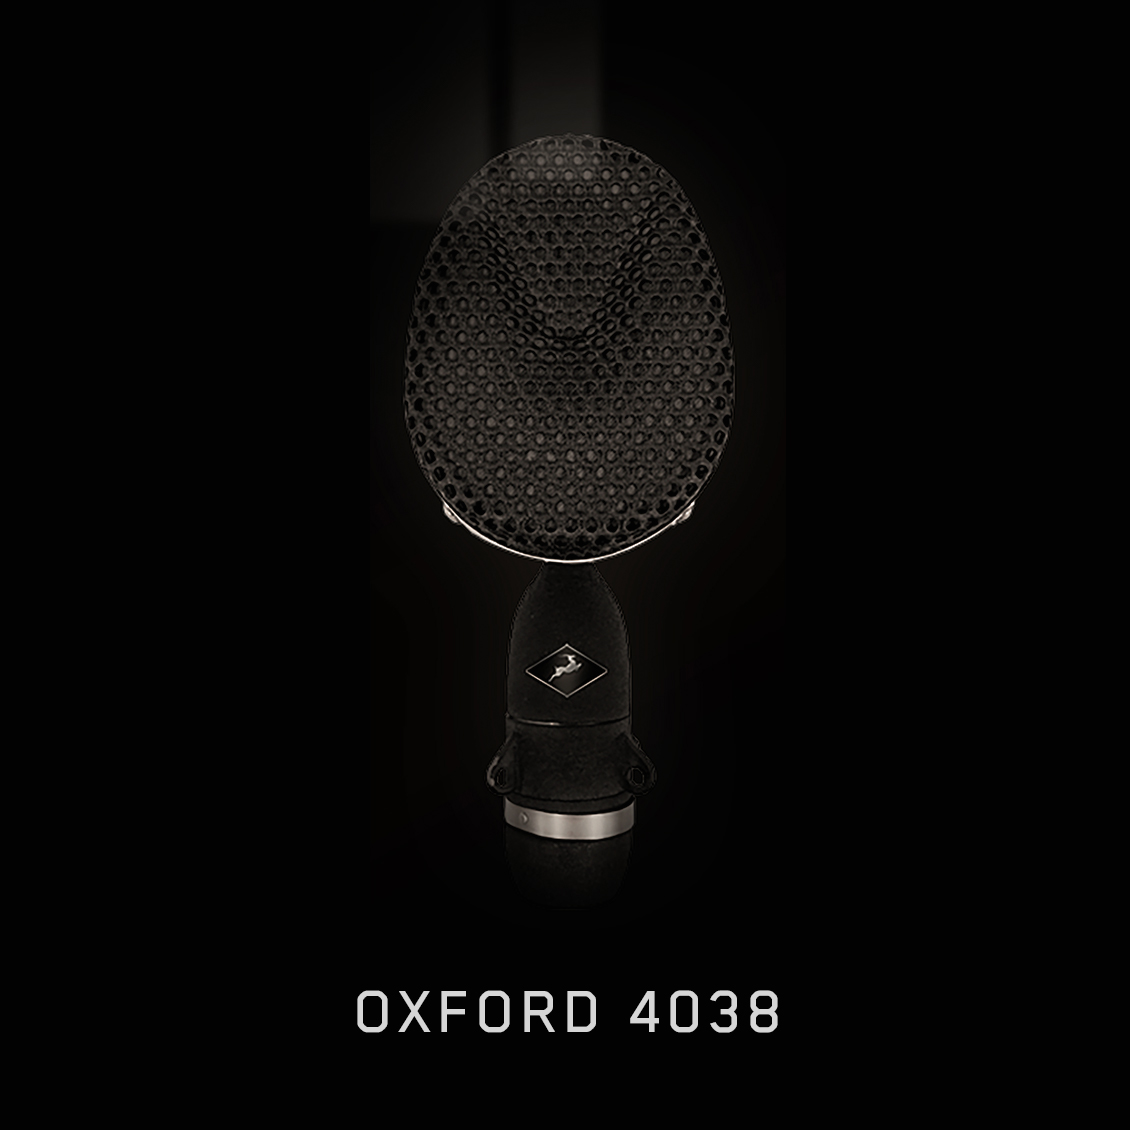 Oxford 4038